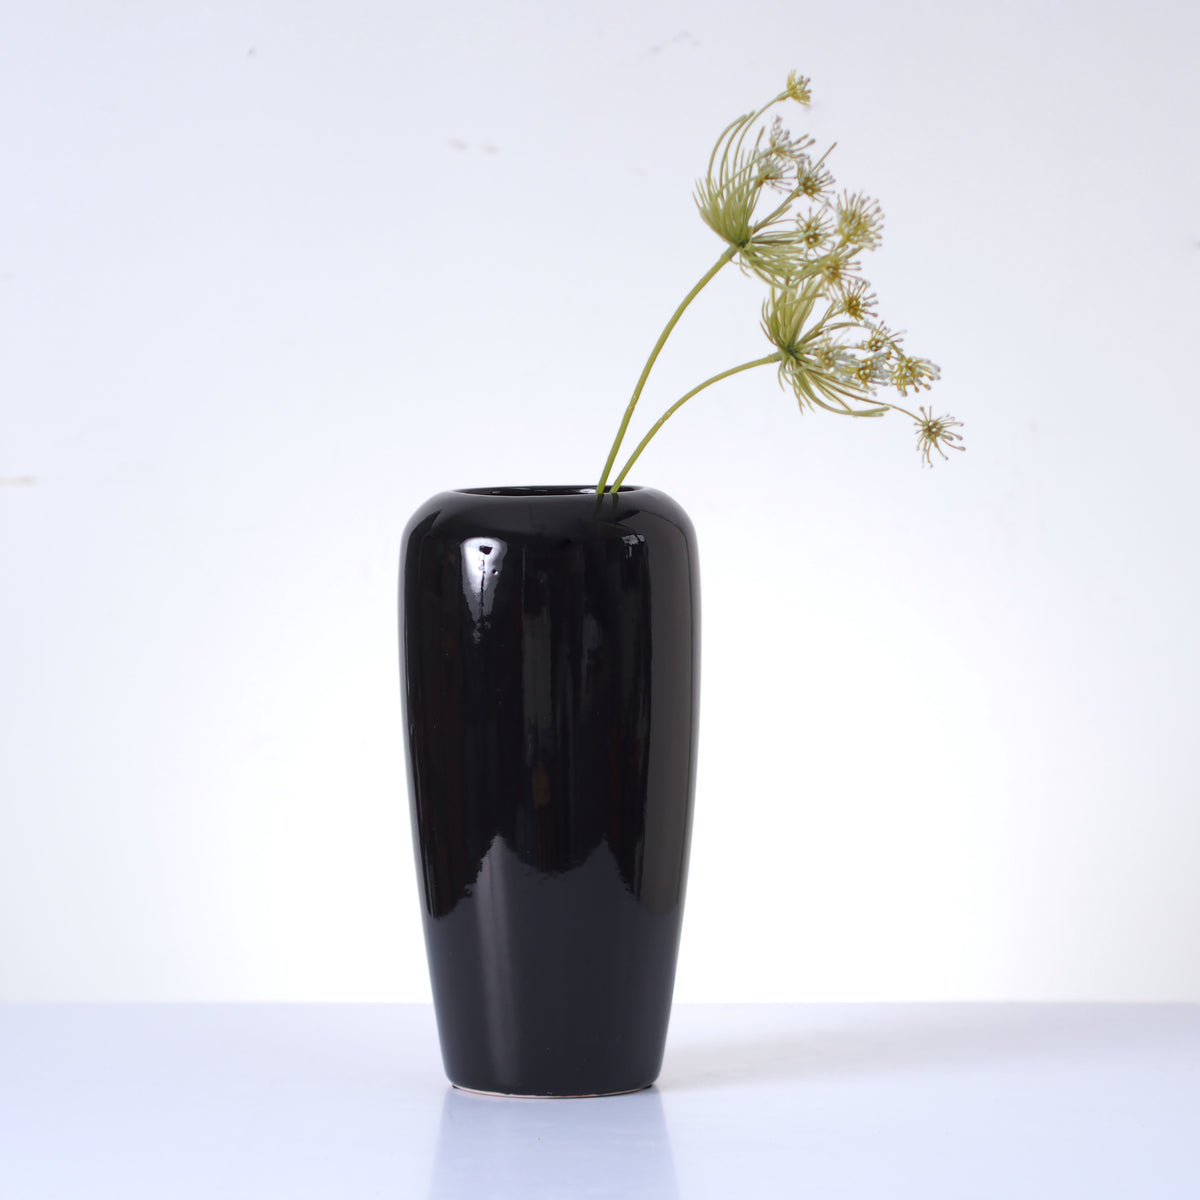 HOSLEY® Ceramic Vases, Black Glazed, Set of 2, 10 inches High each